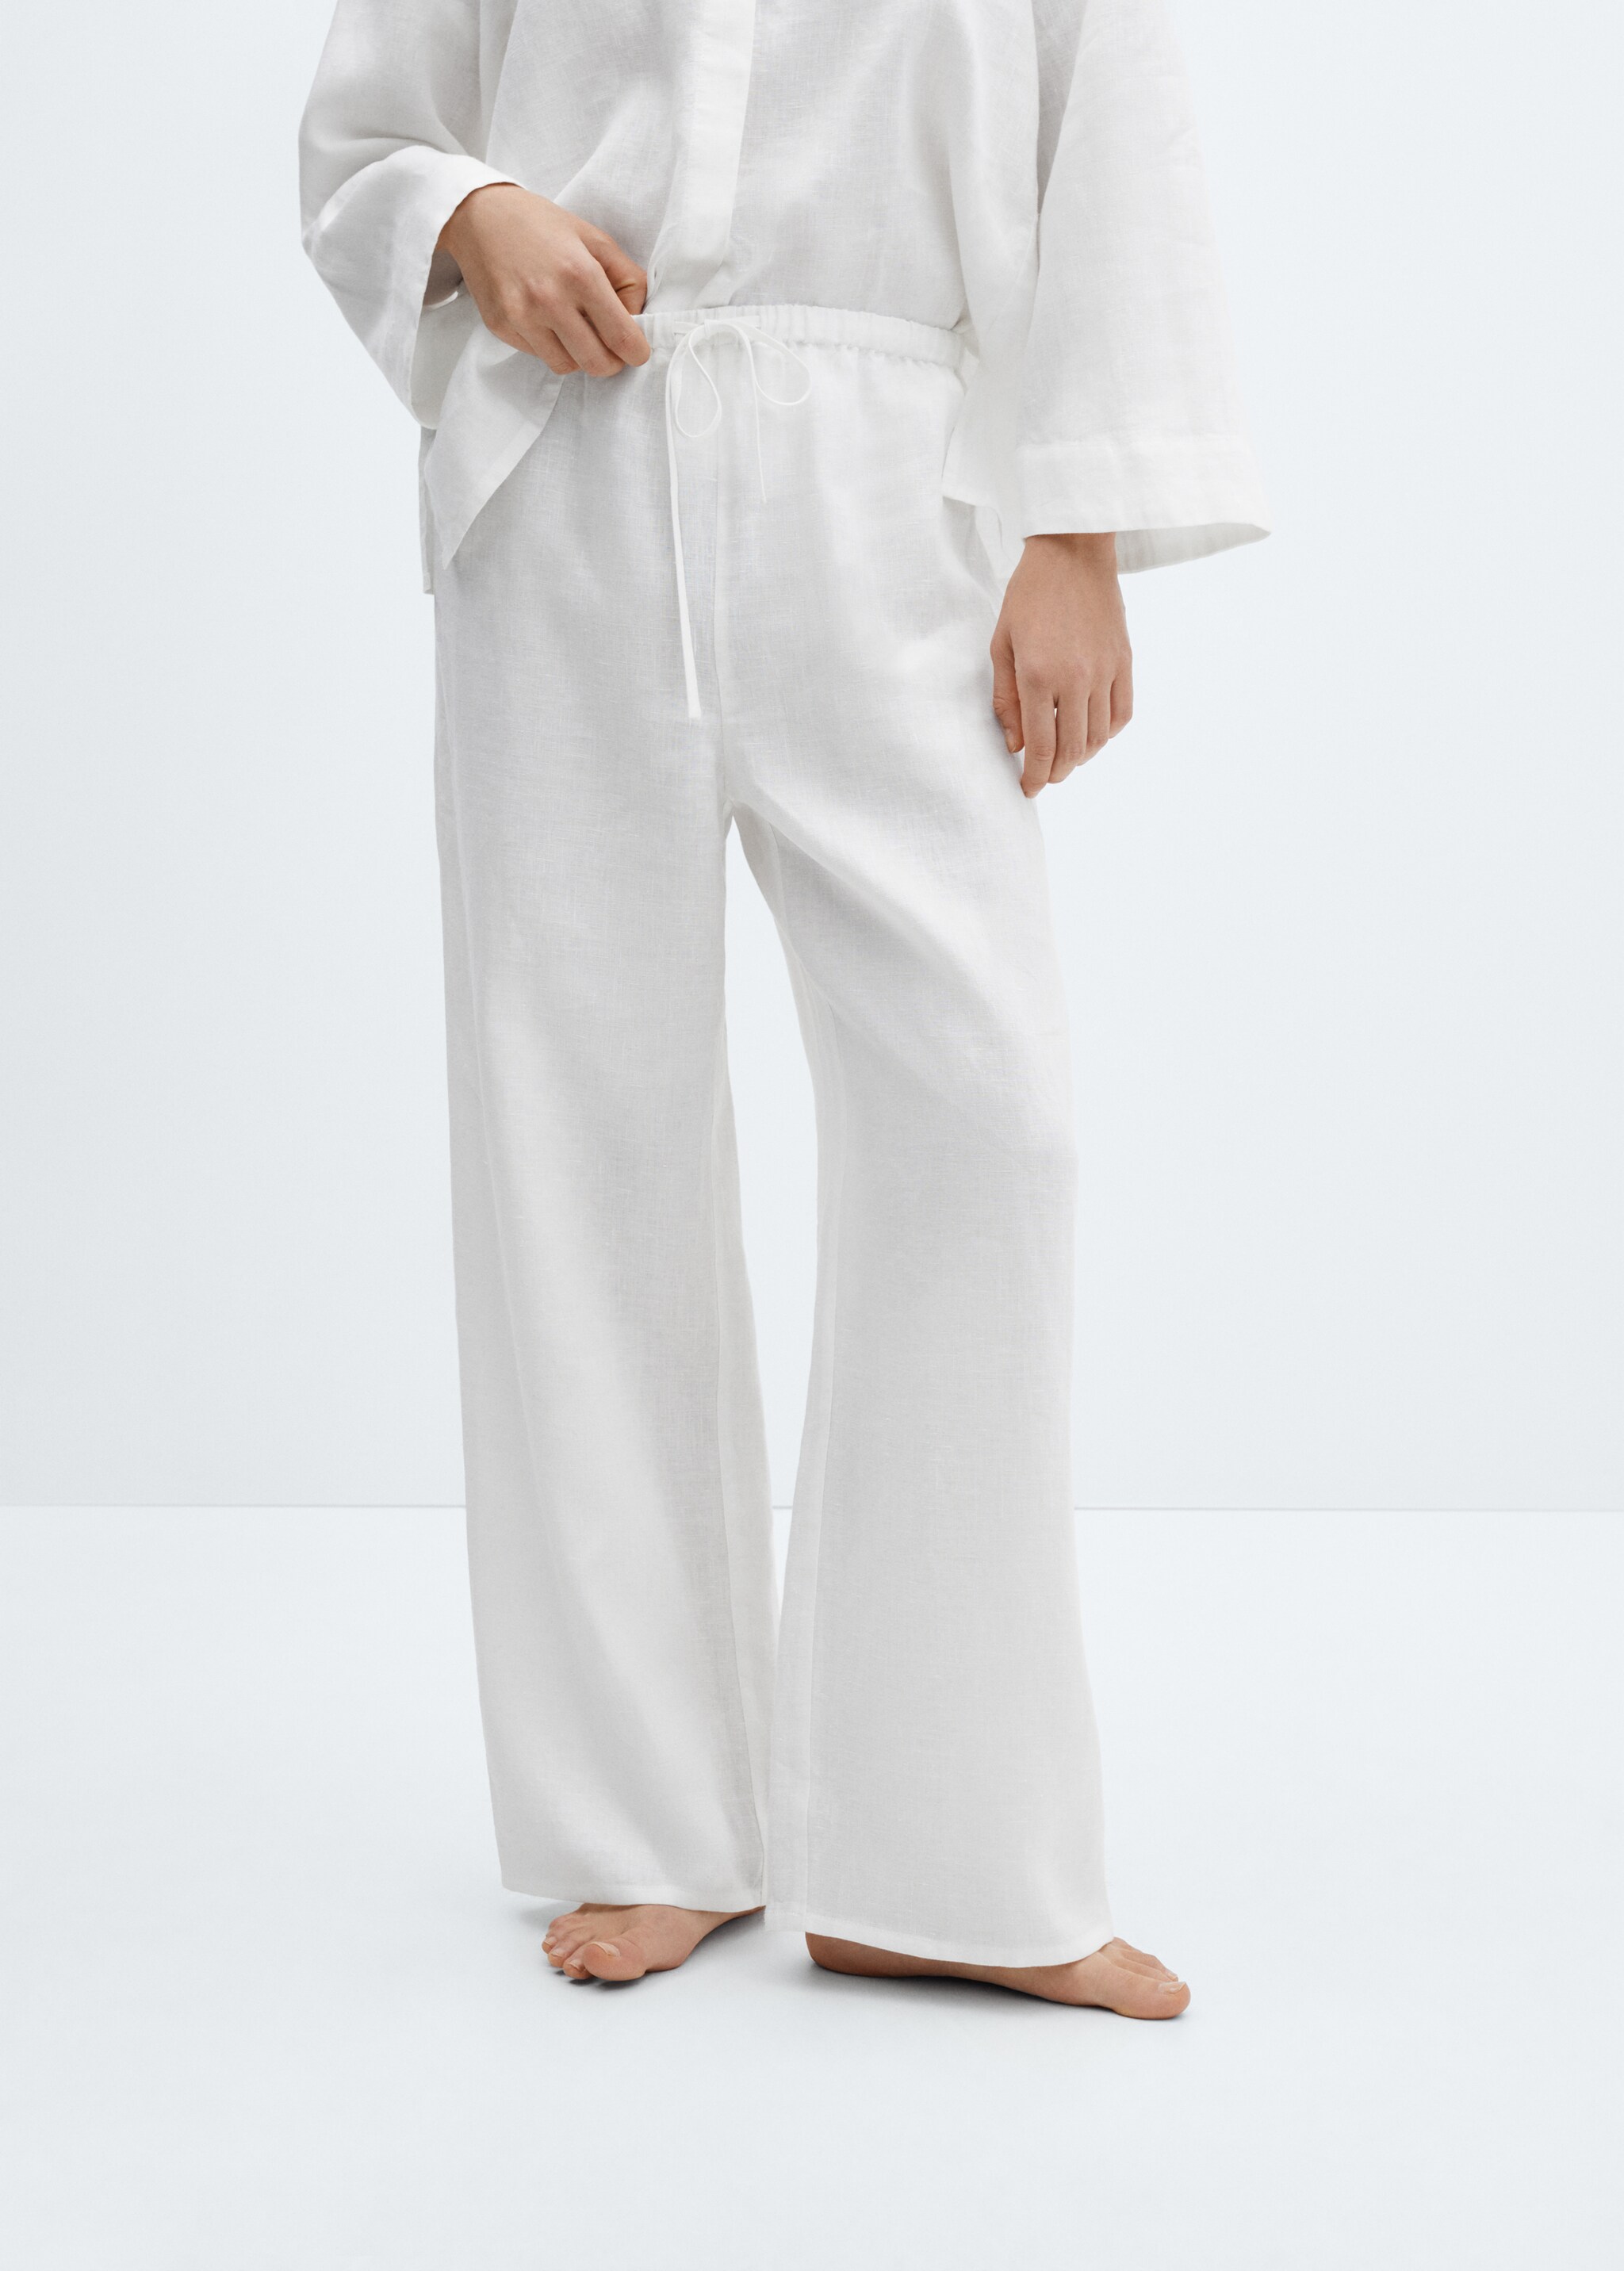 100% linen pyjama trousers - Medium plane